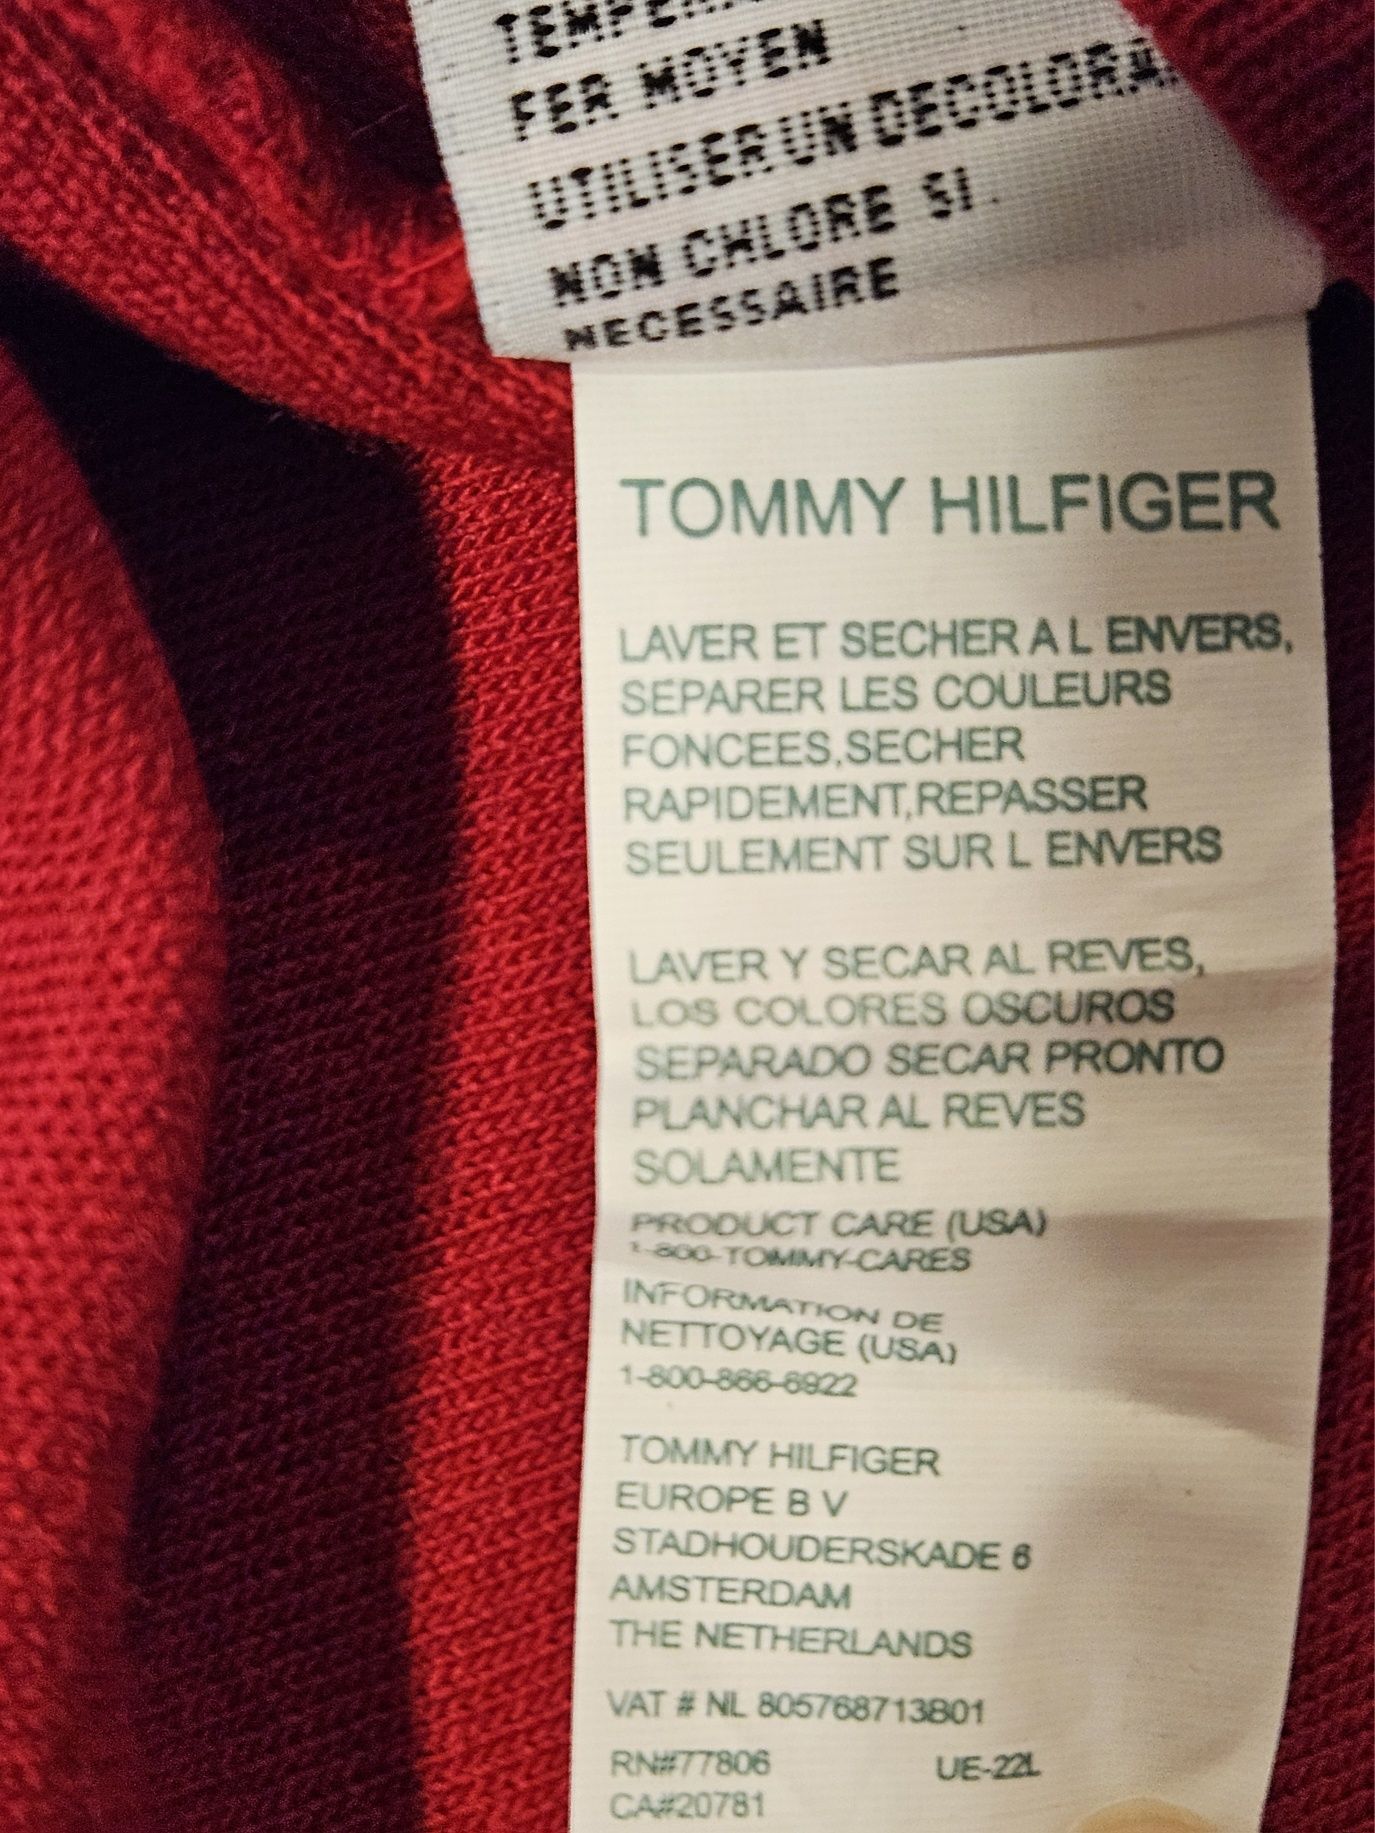 Pulover Tommy Hilfiger rosu marime XXL